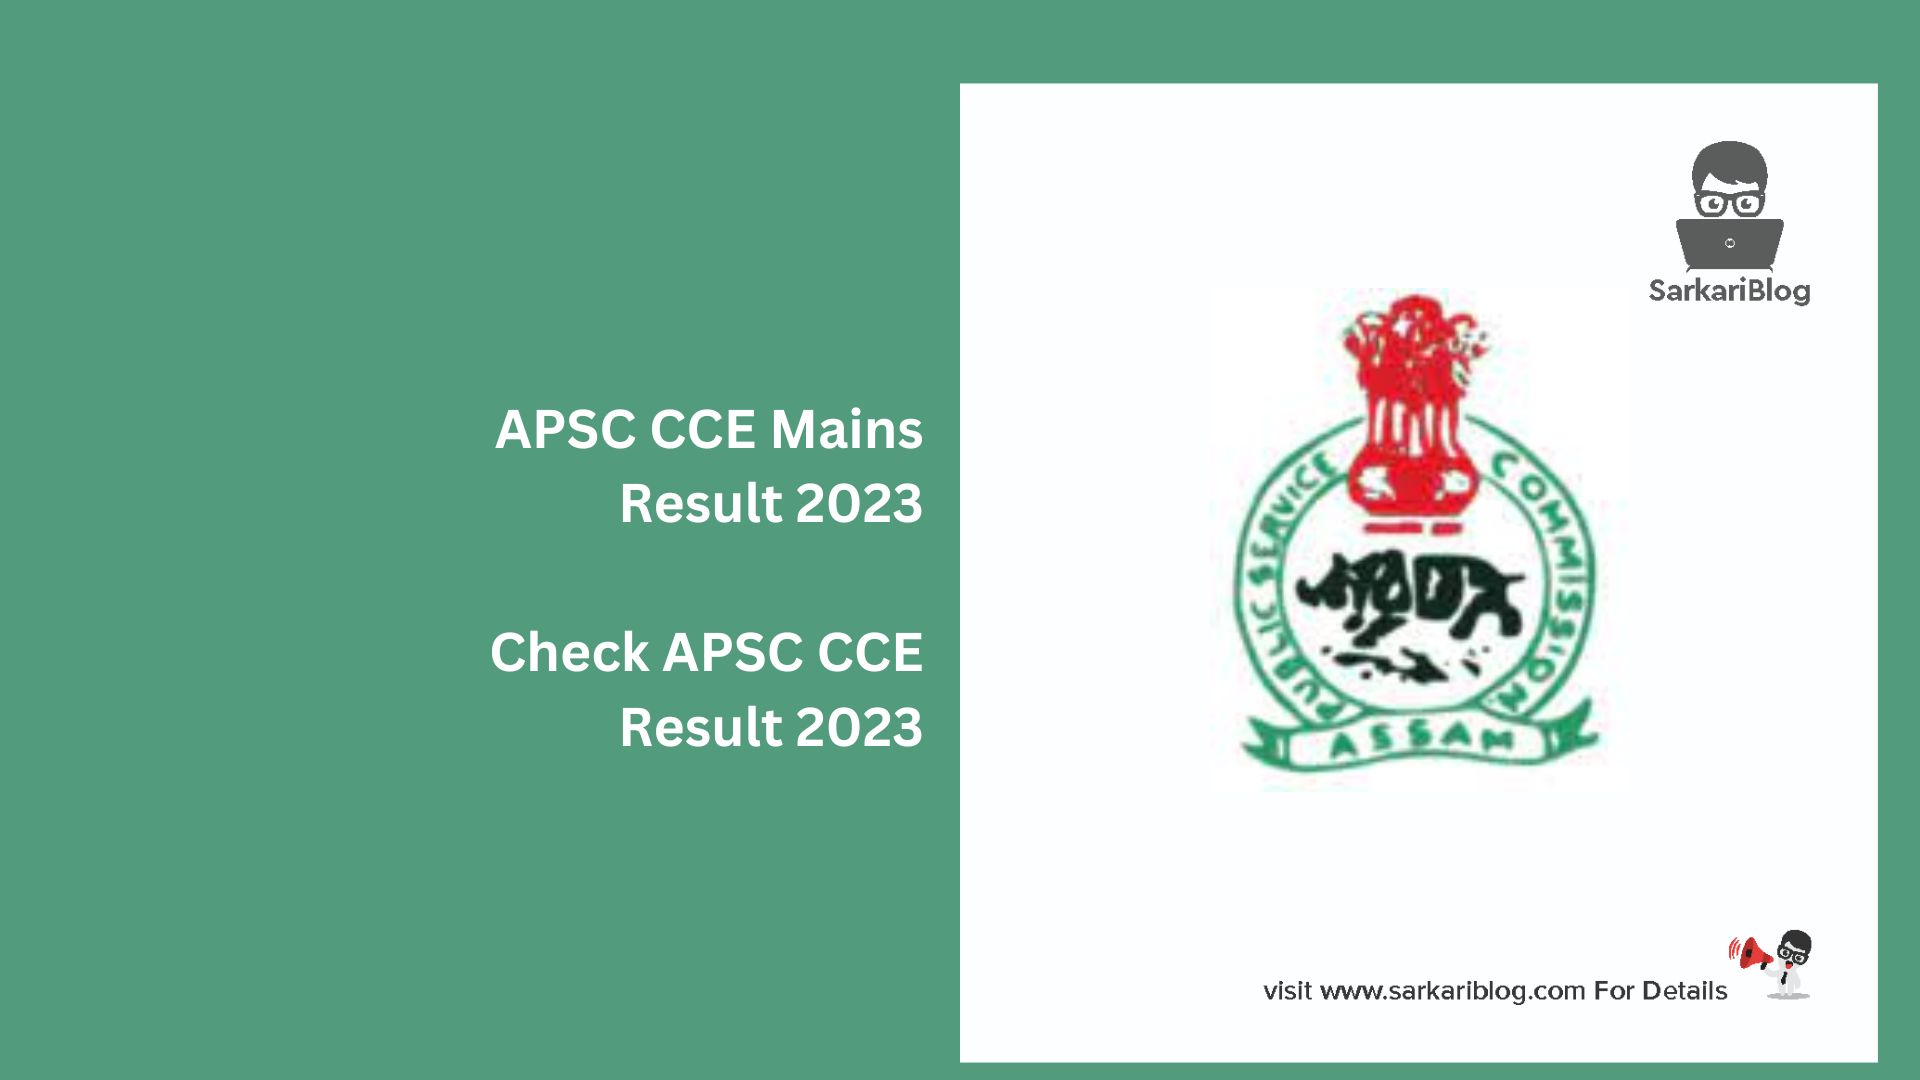 APSC CCE Mains Result 2023